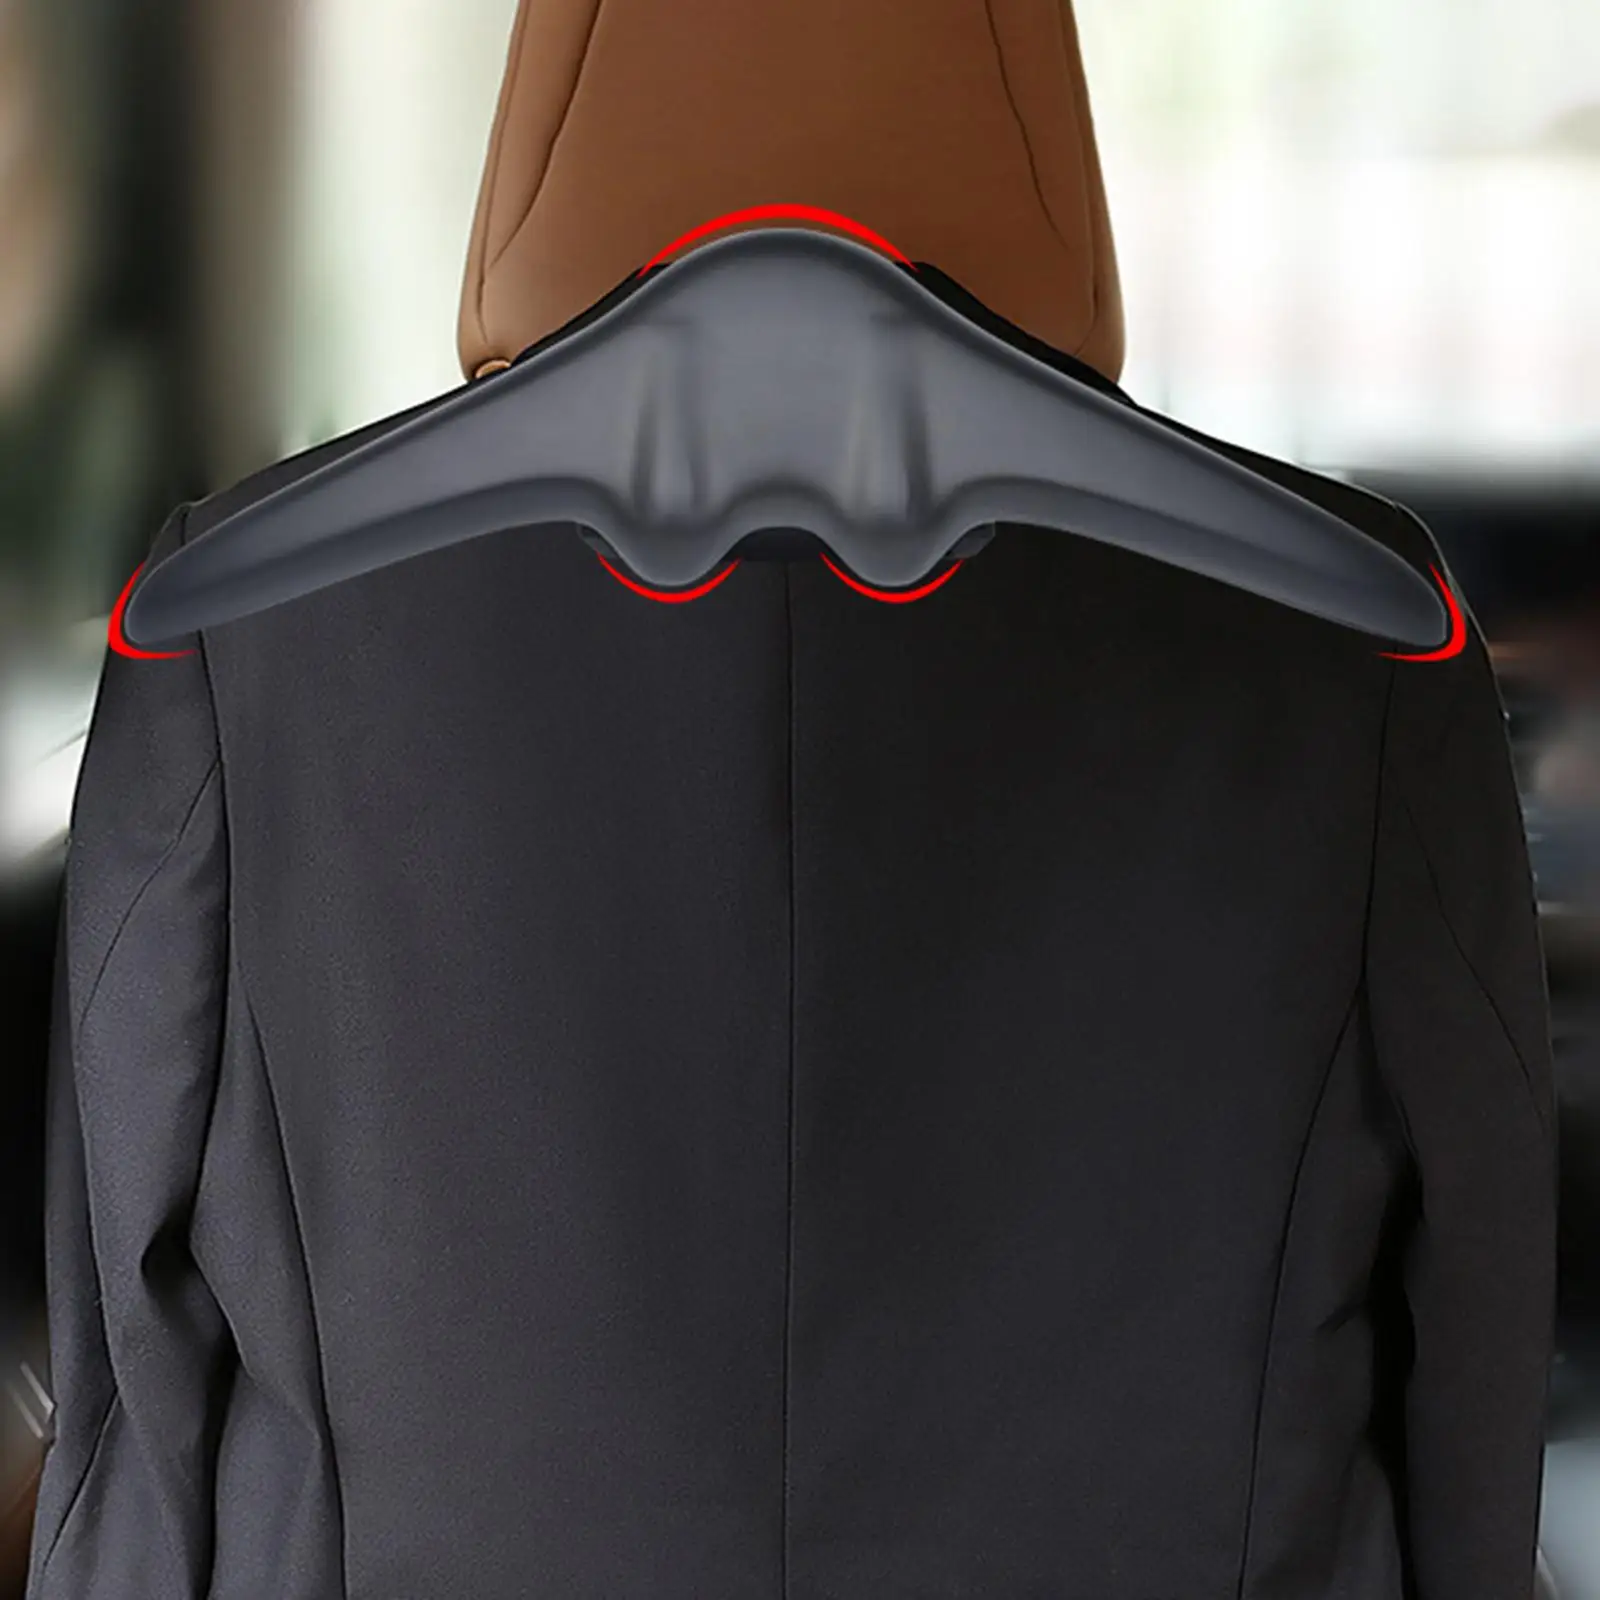 Car Coat Hangers PU Leather Safety Hanger for Jacket Travel Storage